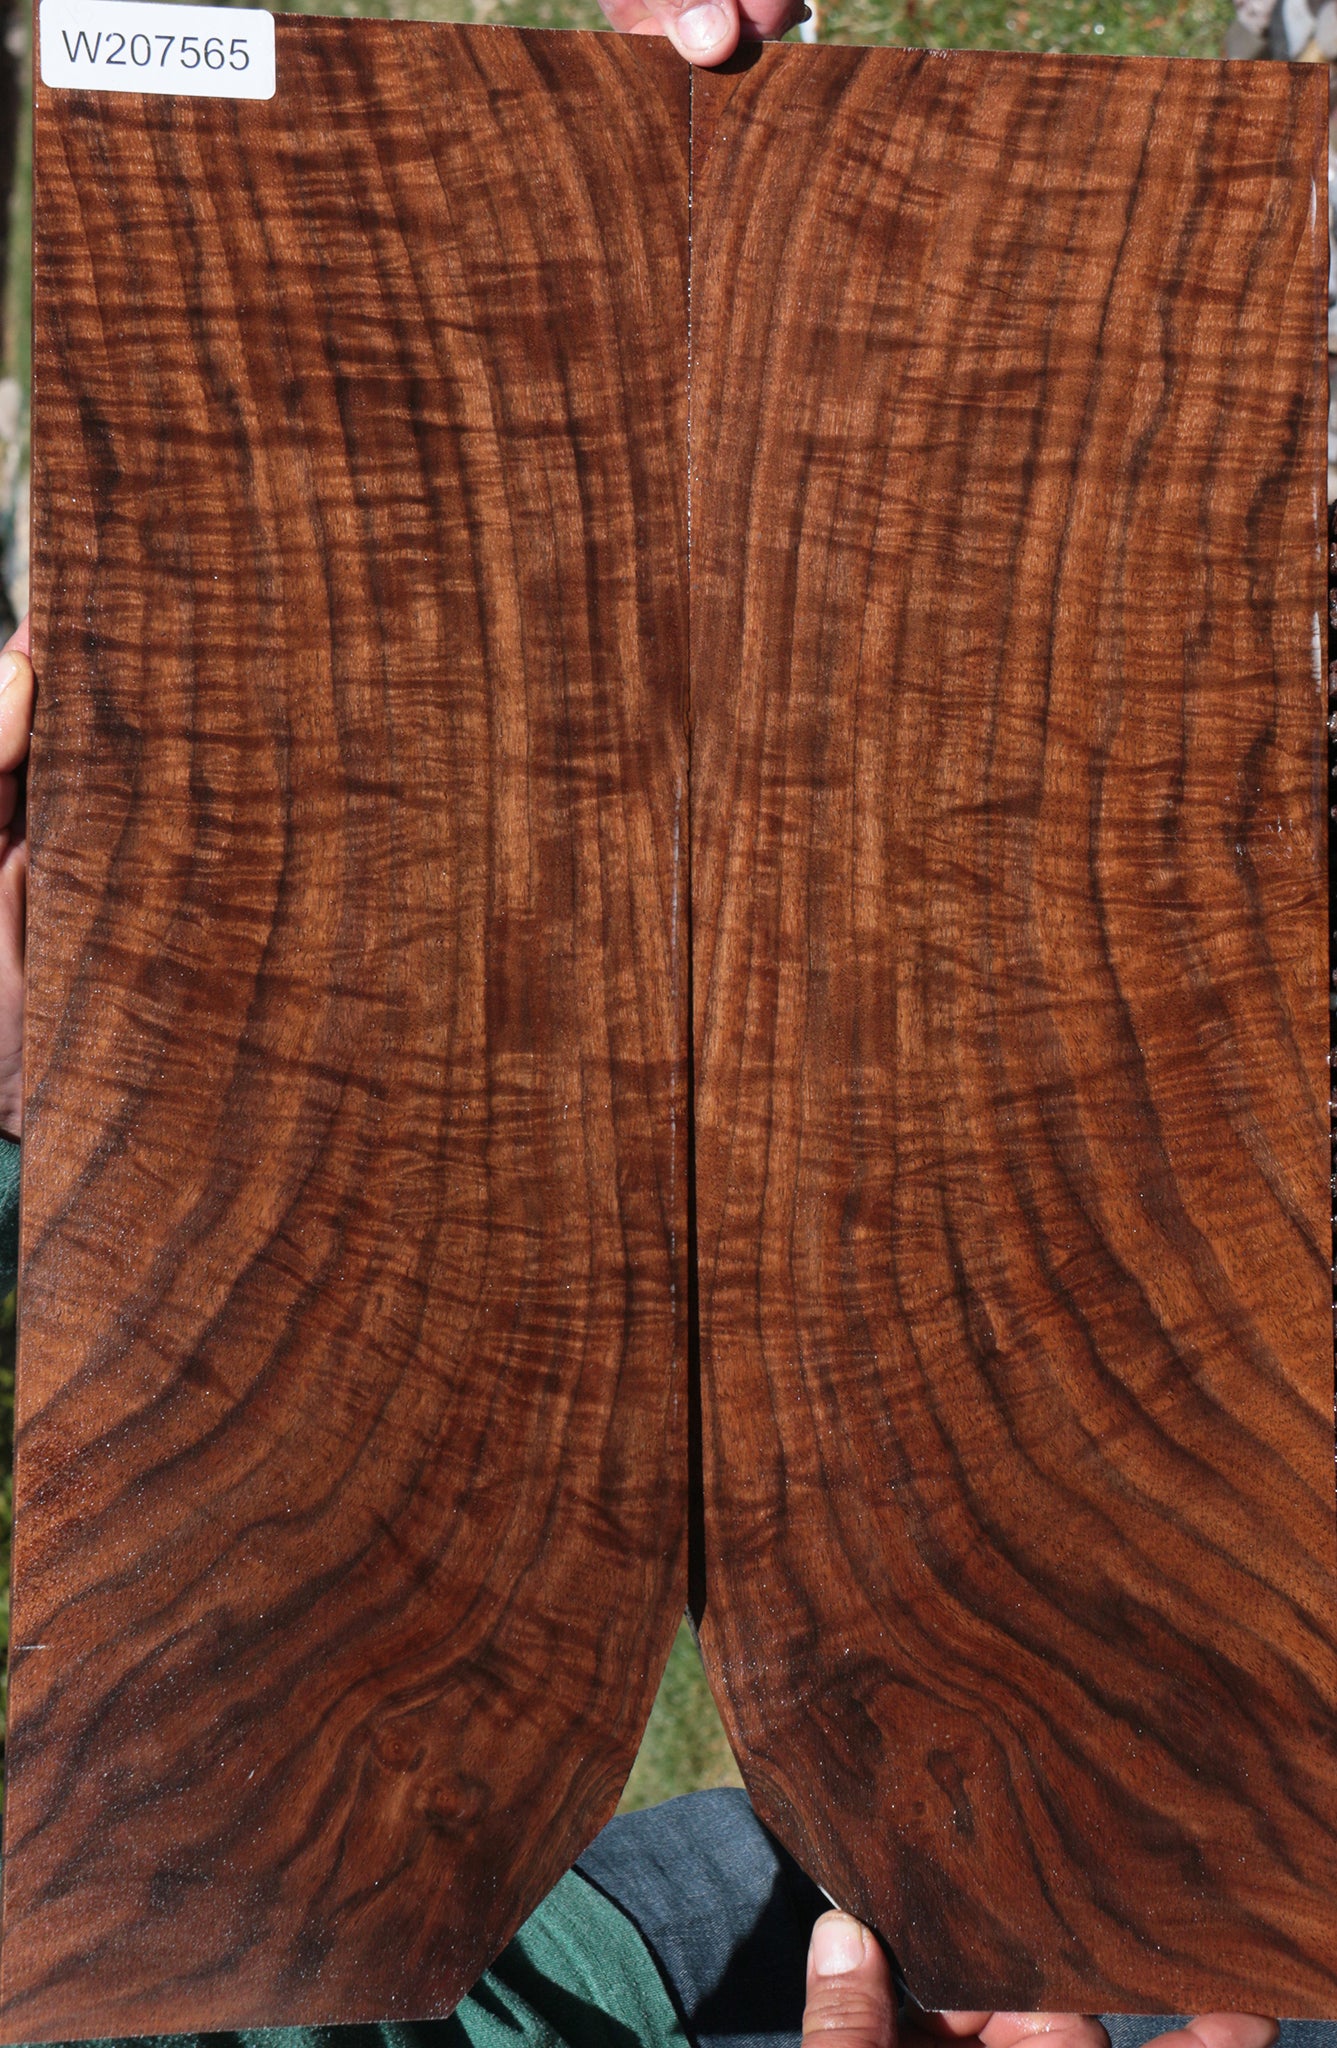 Claro Walnut Micro Lumber (2-Piece Set)